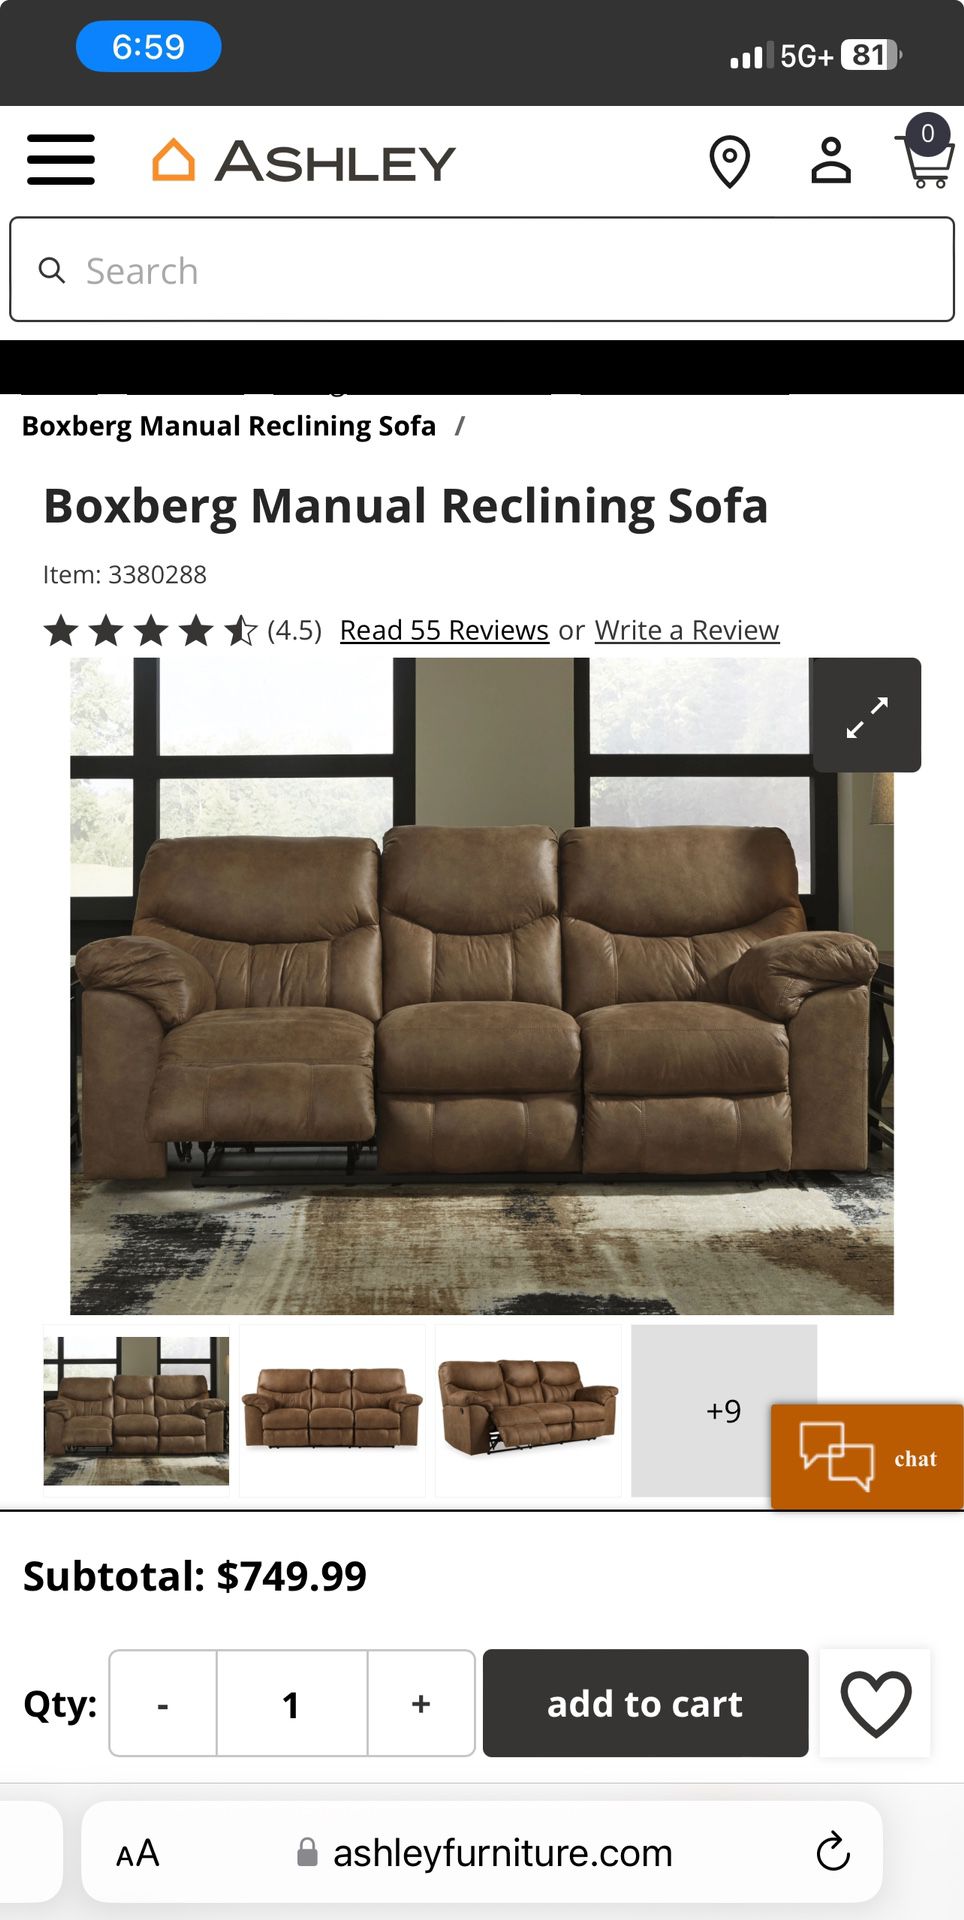 Boxberg Manual Reclining Sofa